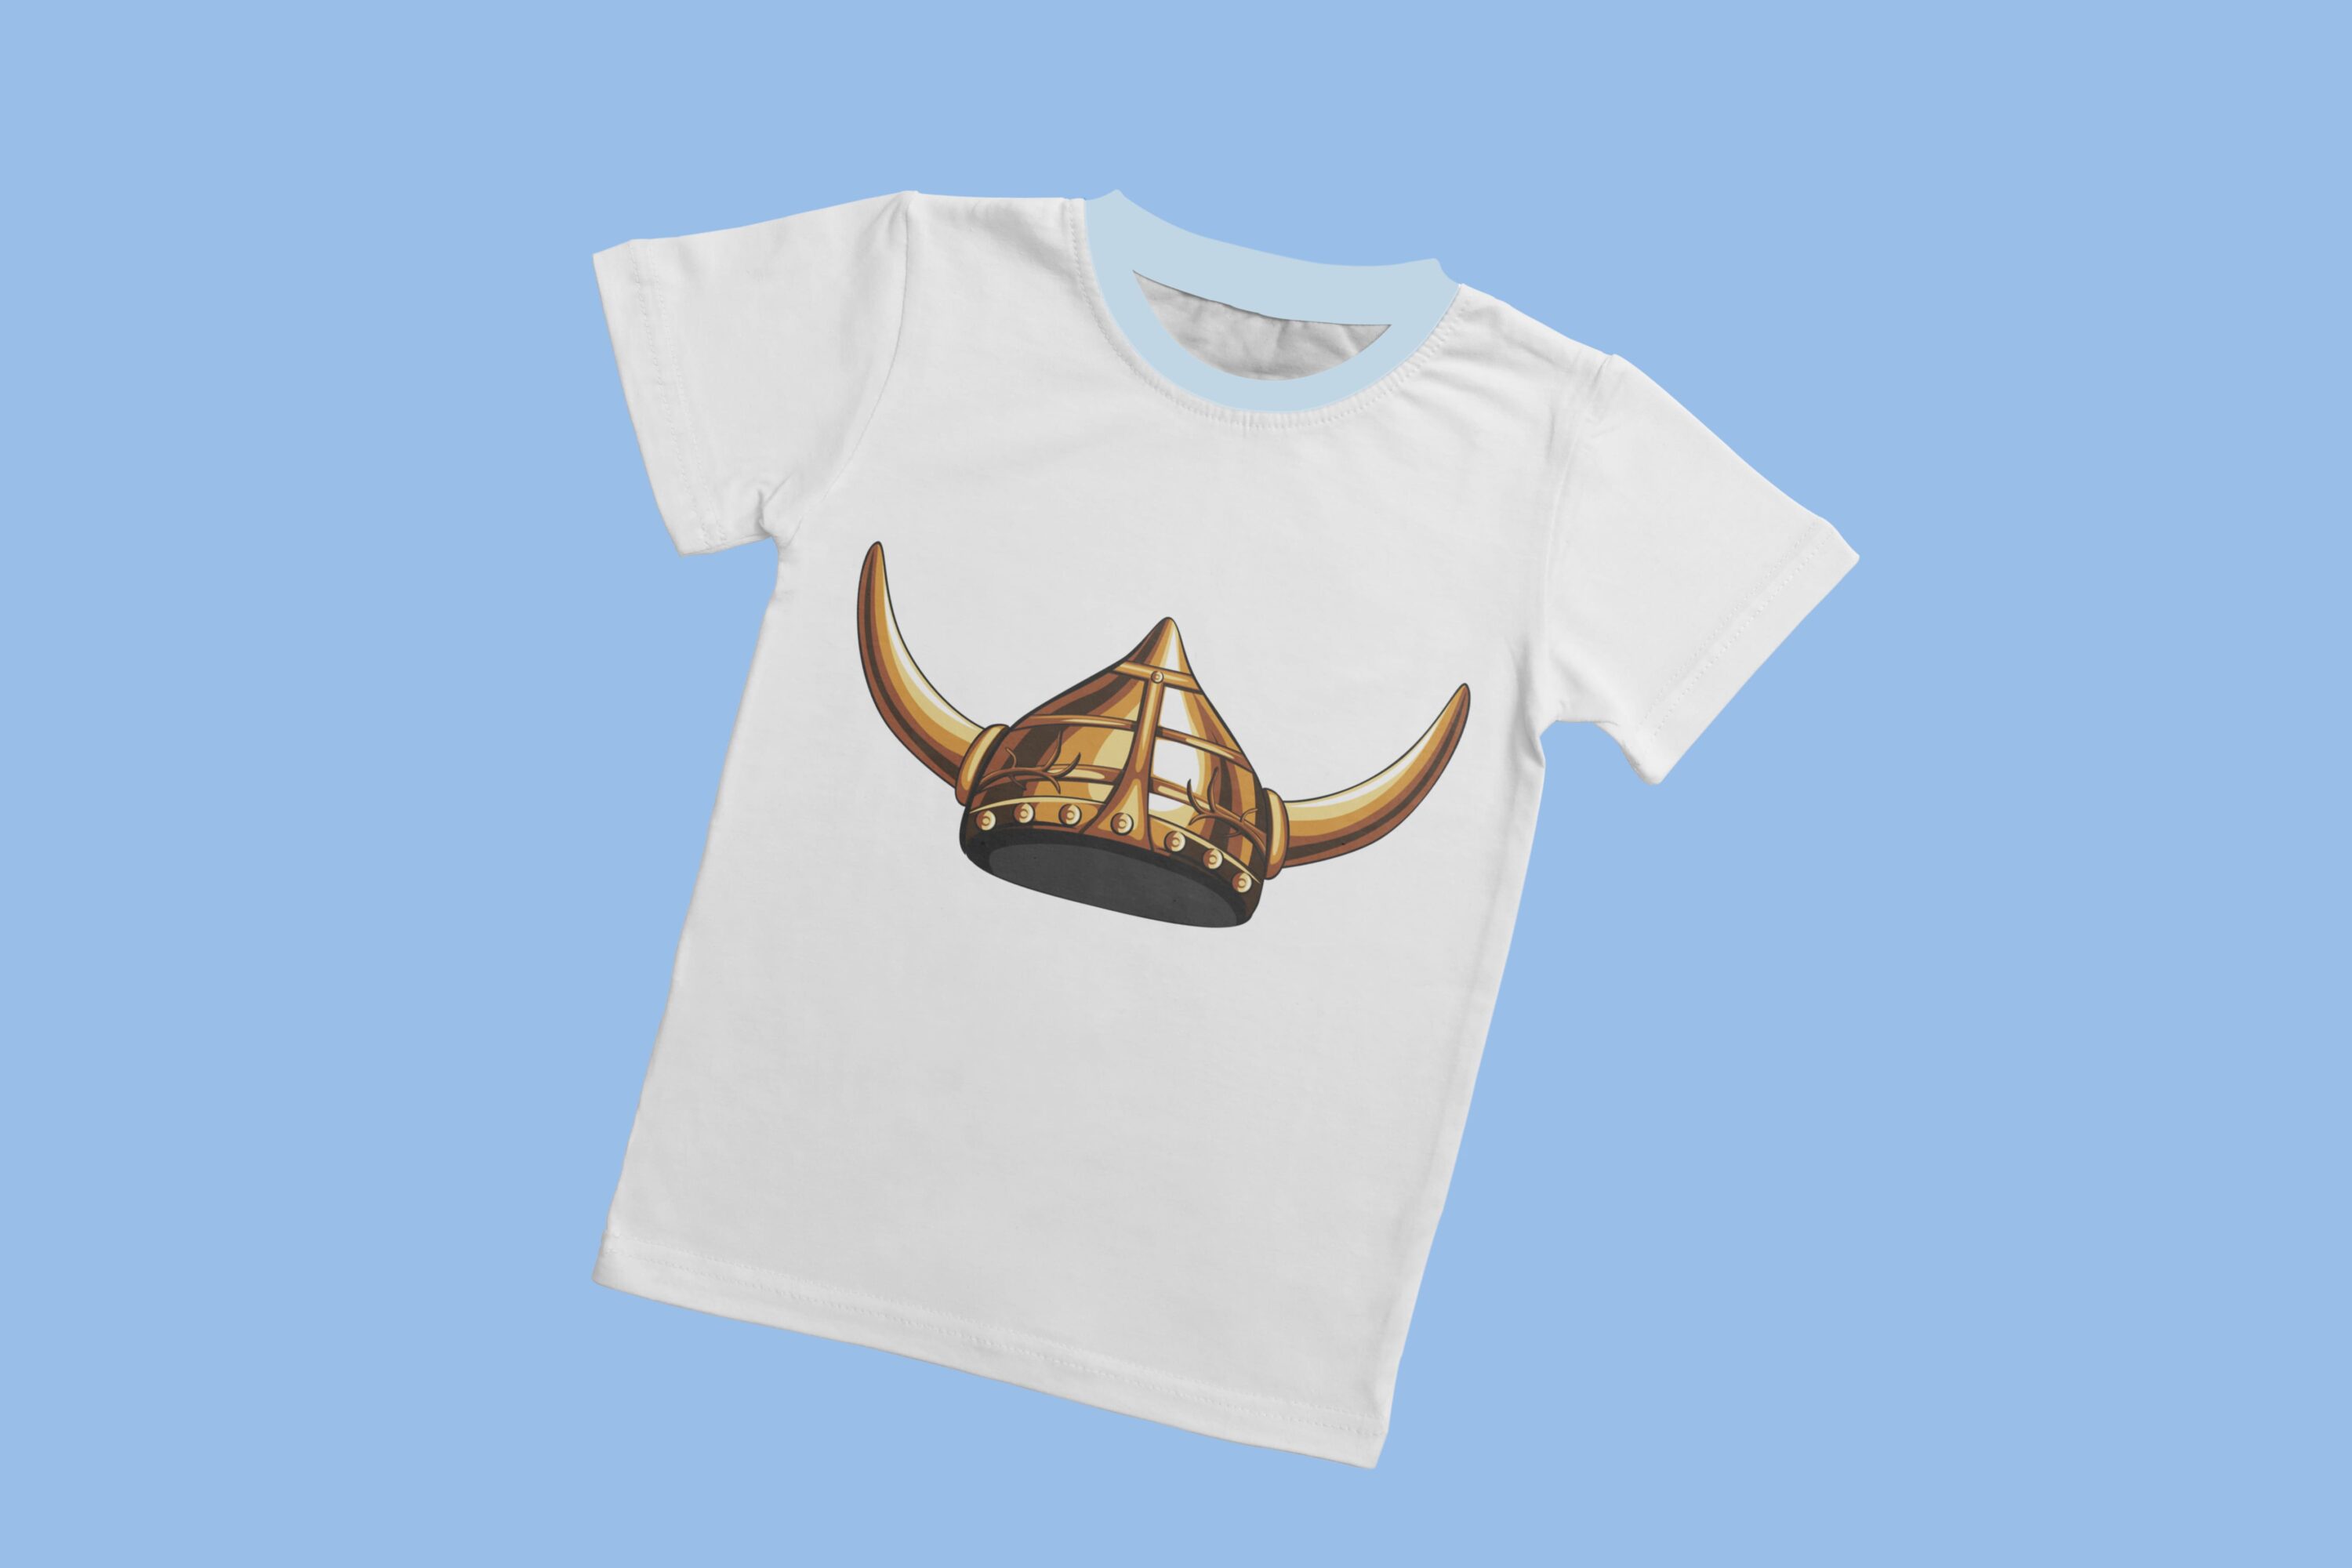 Nice gold viking helmet for your t-shirt.